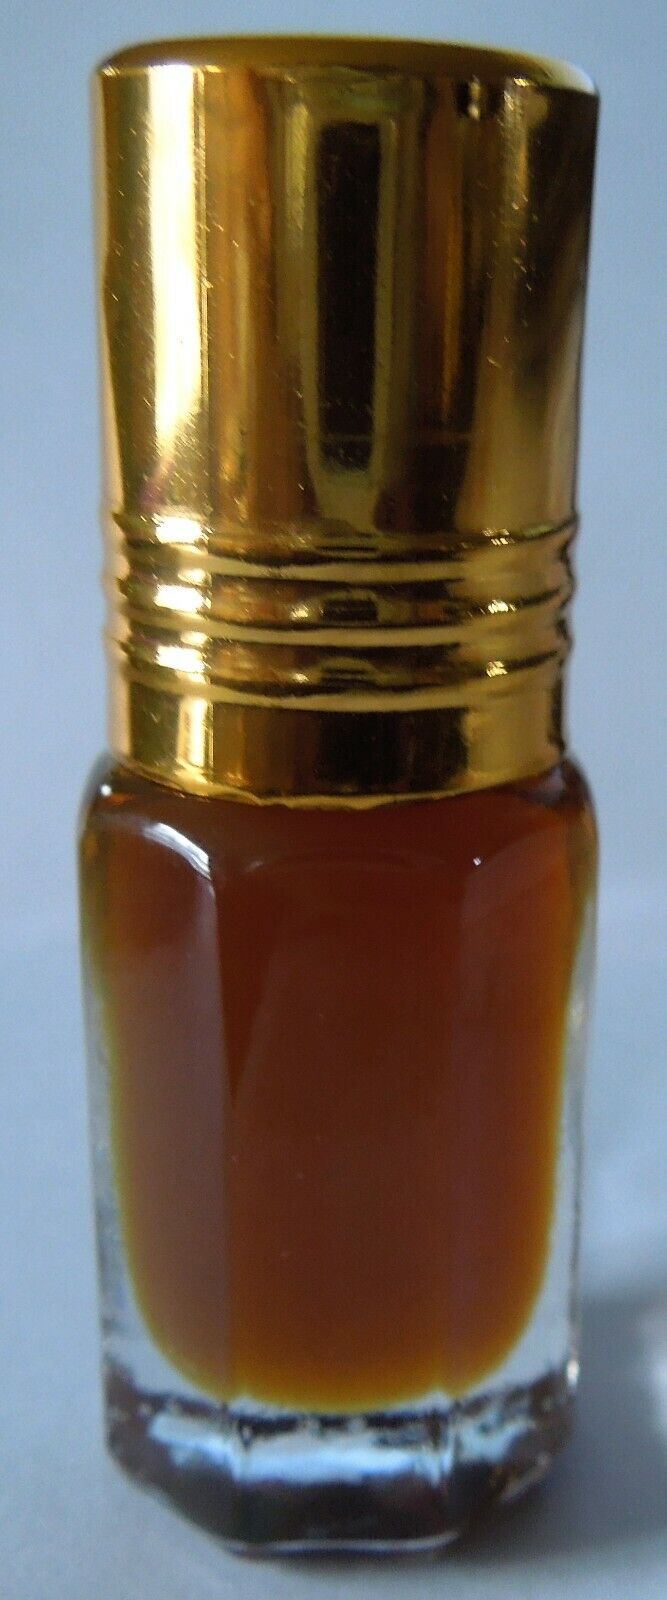 Rare Henna Heena Flower Extract Natural Pure Heavy Oil Fragrance 3 ml عطر الحنة